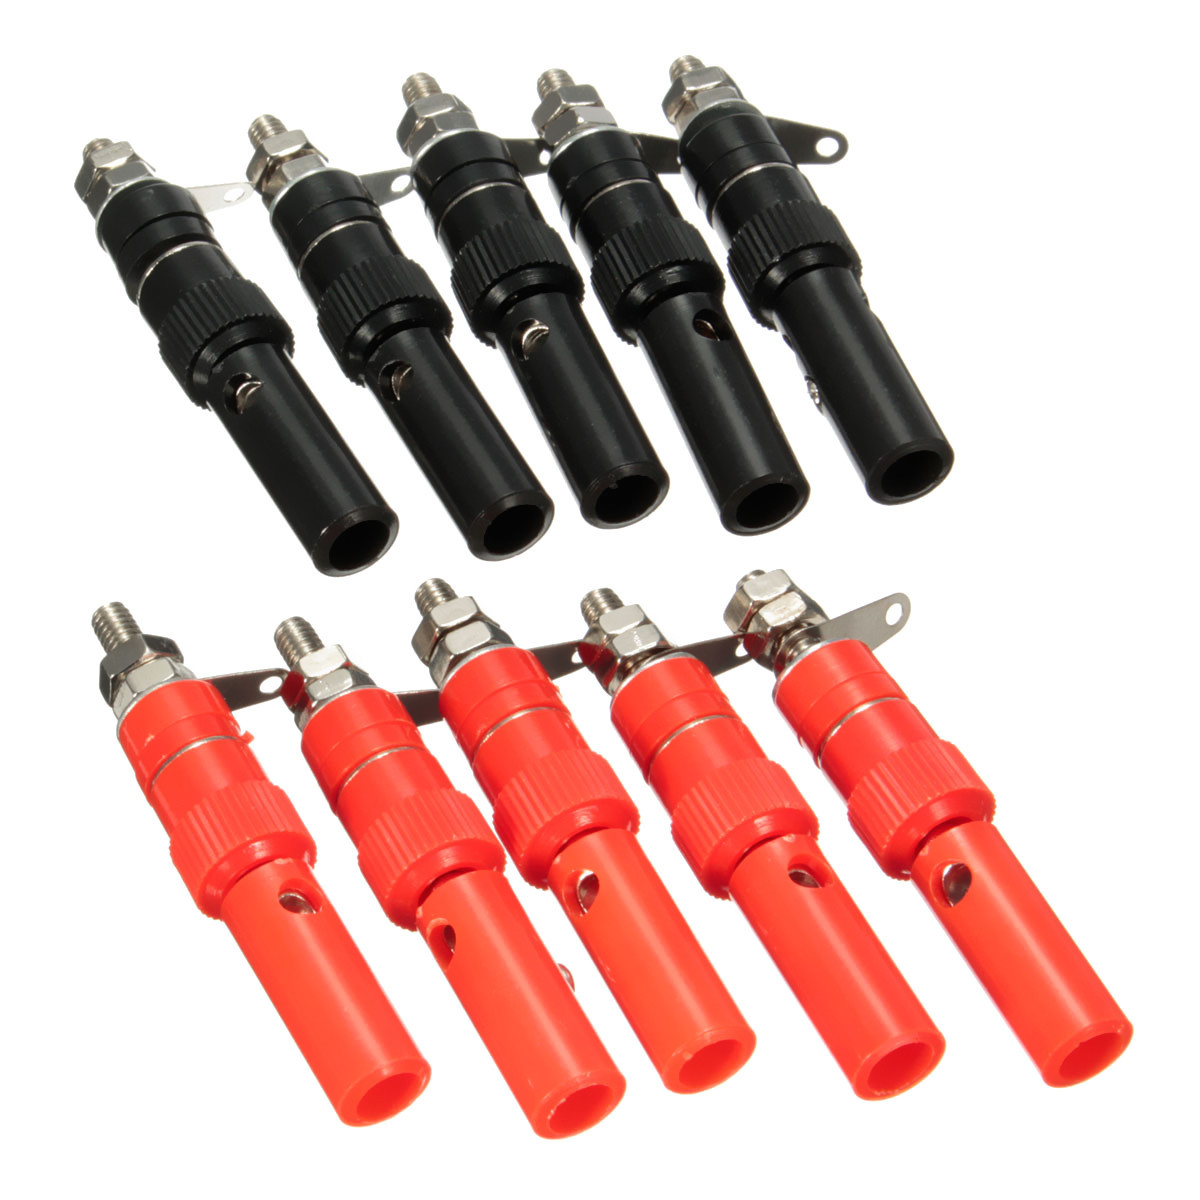 DANIU-50-Pairs-4mm-Terminal-Banana-Plug-Socket-Jack-Connectors-Instrument-Light-Tools-Black-and-Red-1358118-2